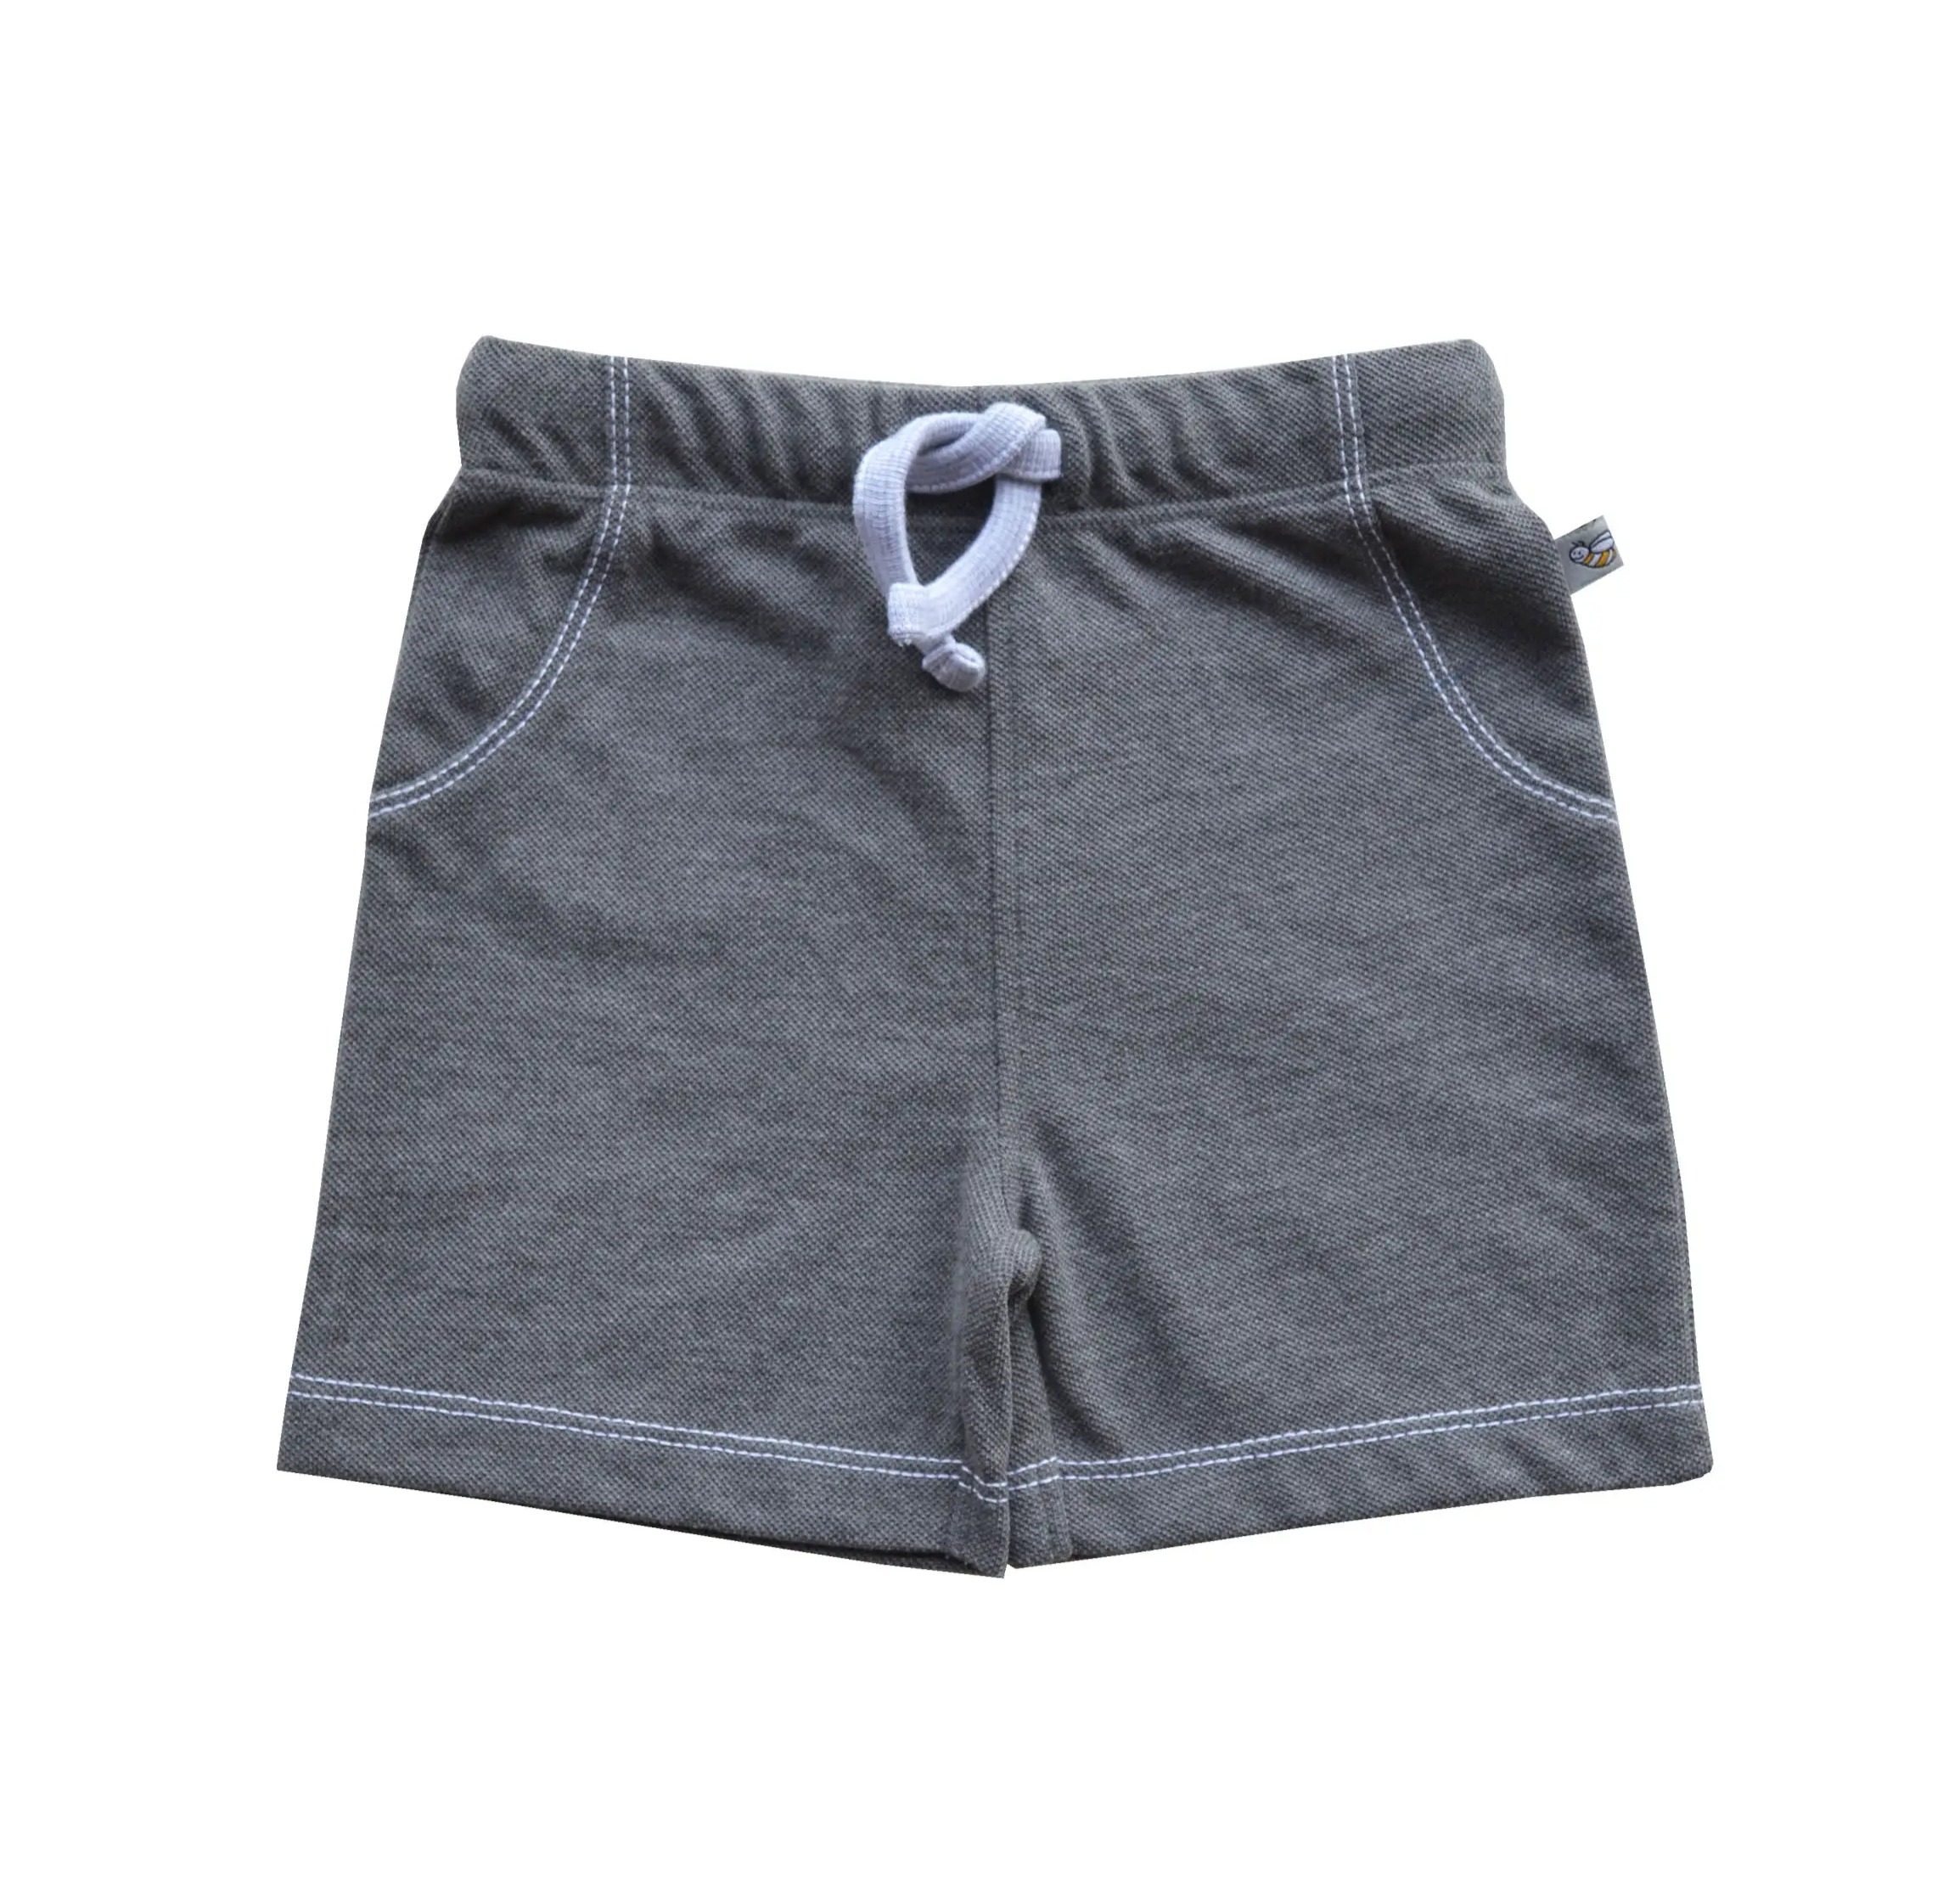 Grey Melange Shorts with cord at waistband (Pique)